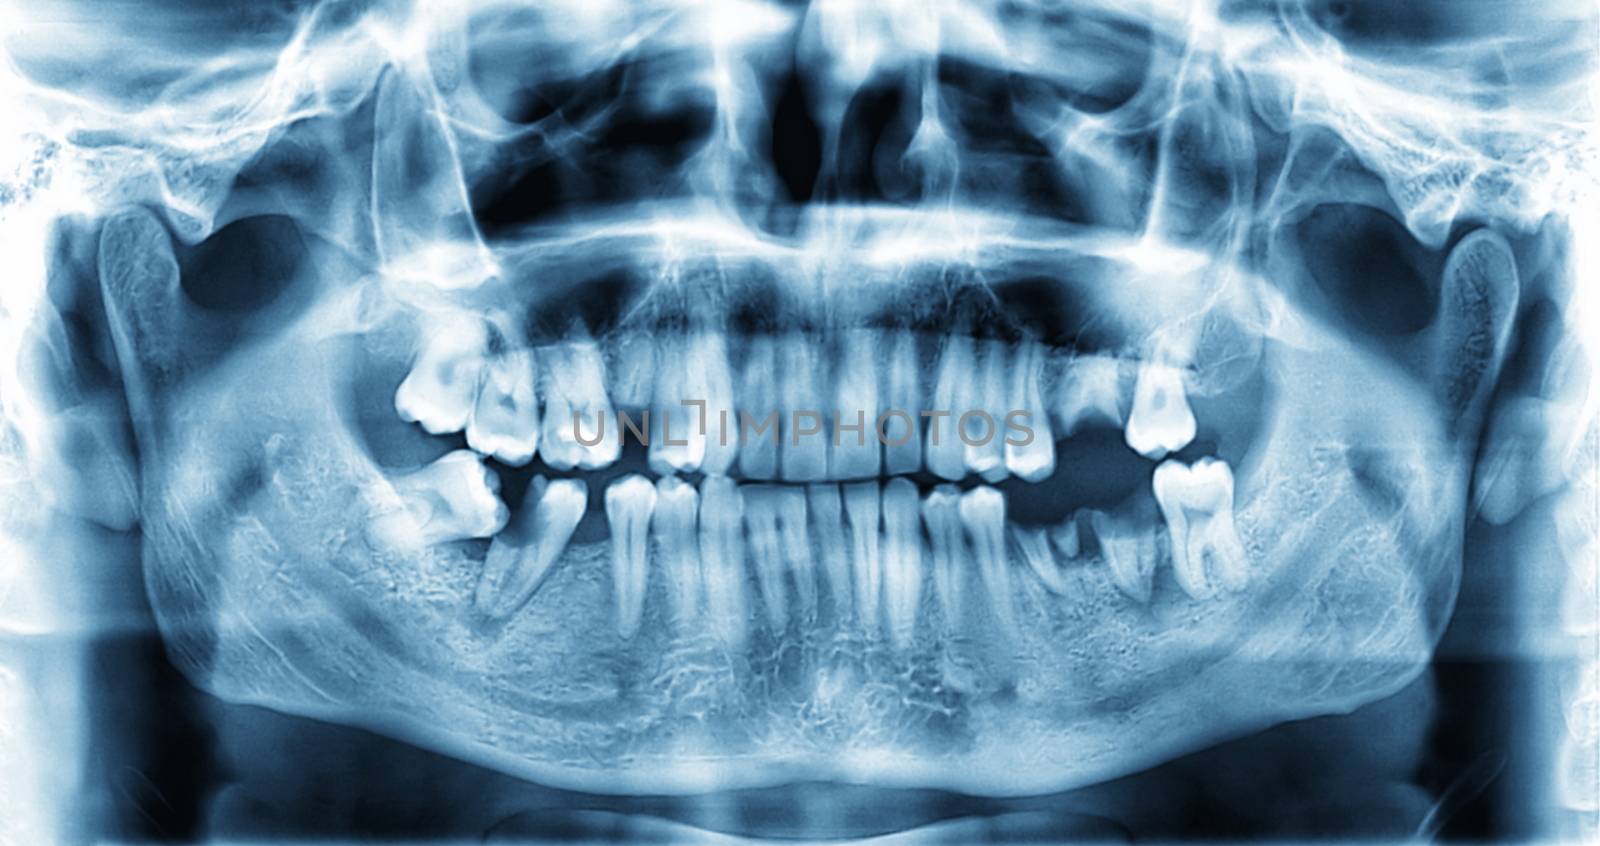 Panoramic dental x-ray image of teeth. by Attila